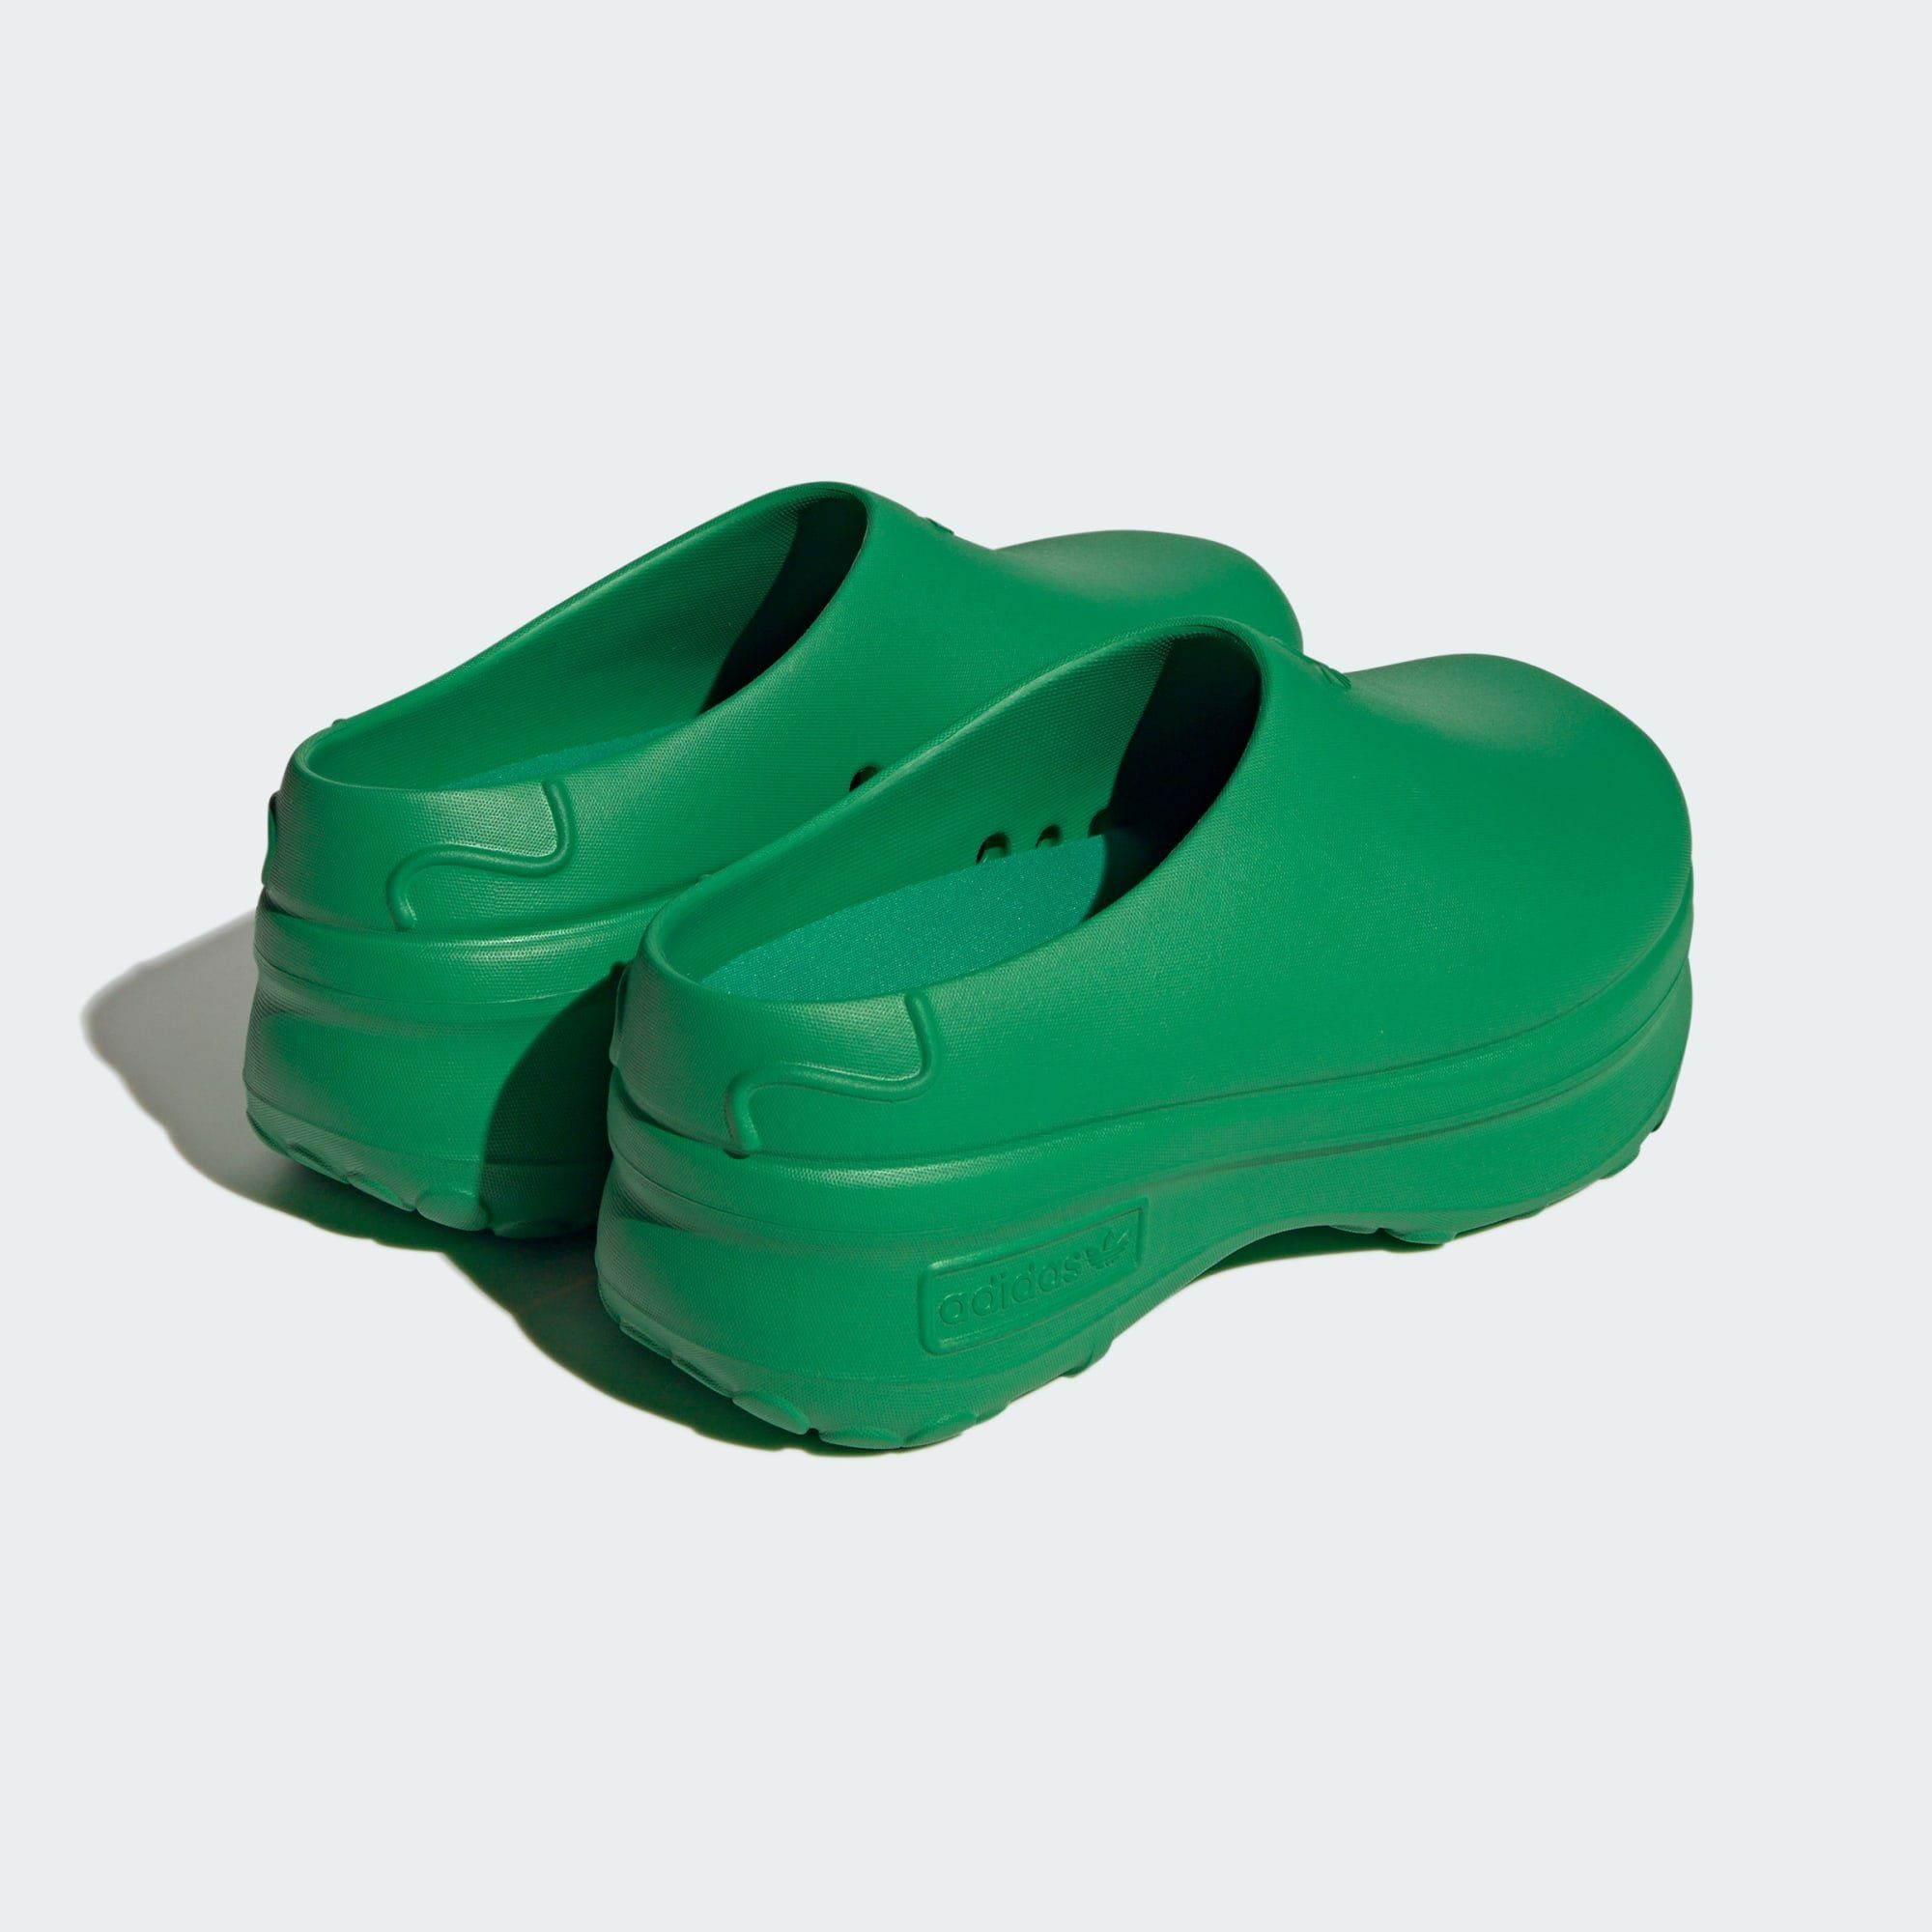 Originals Green Green STAN Slipper Black ADIFOM / Core / MULE SMITH adidas